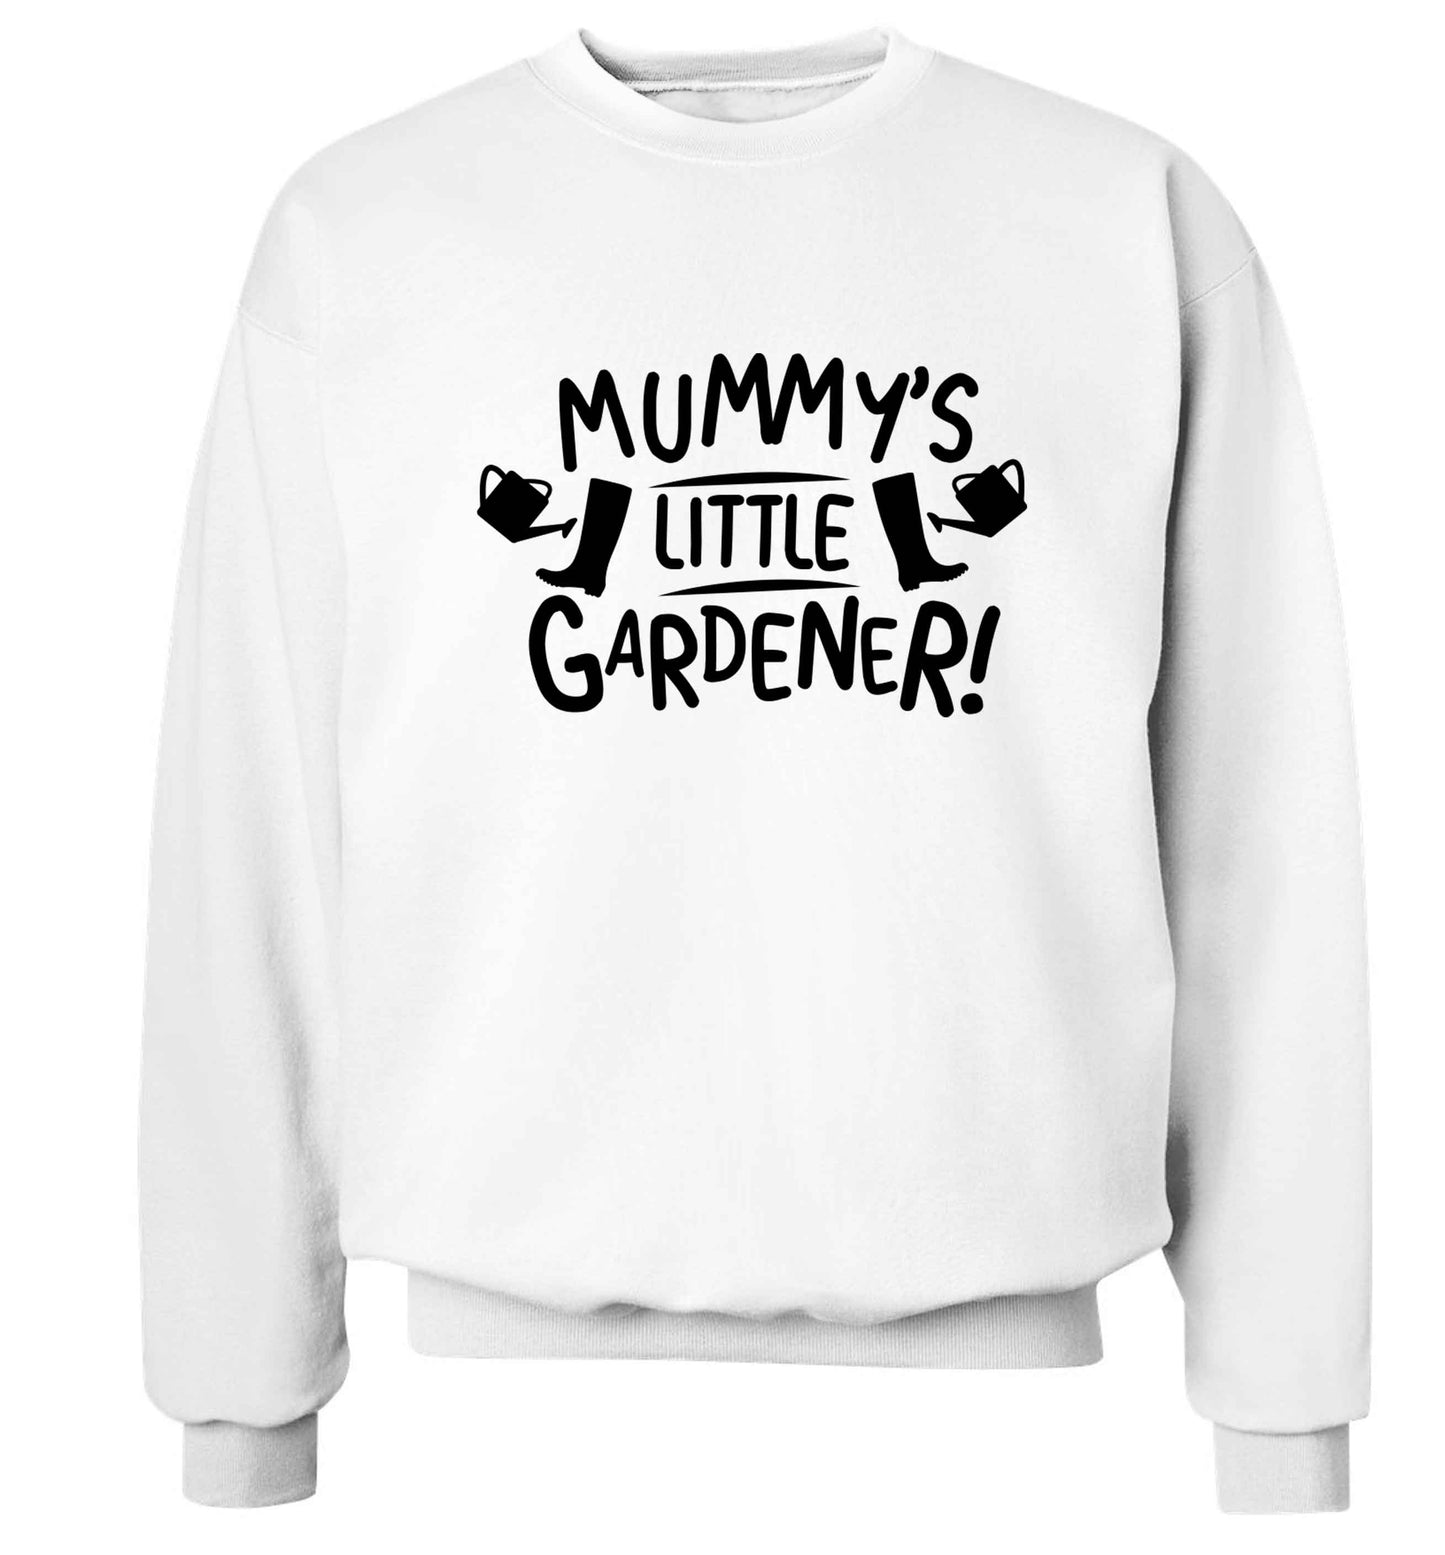 Mummy's little gardener Adult's unisex white Sweater 2XL